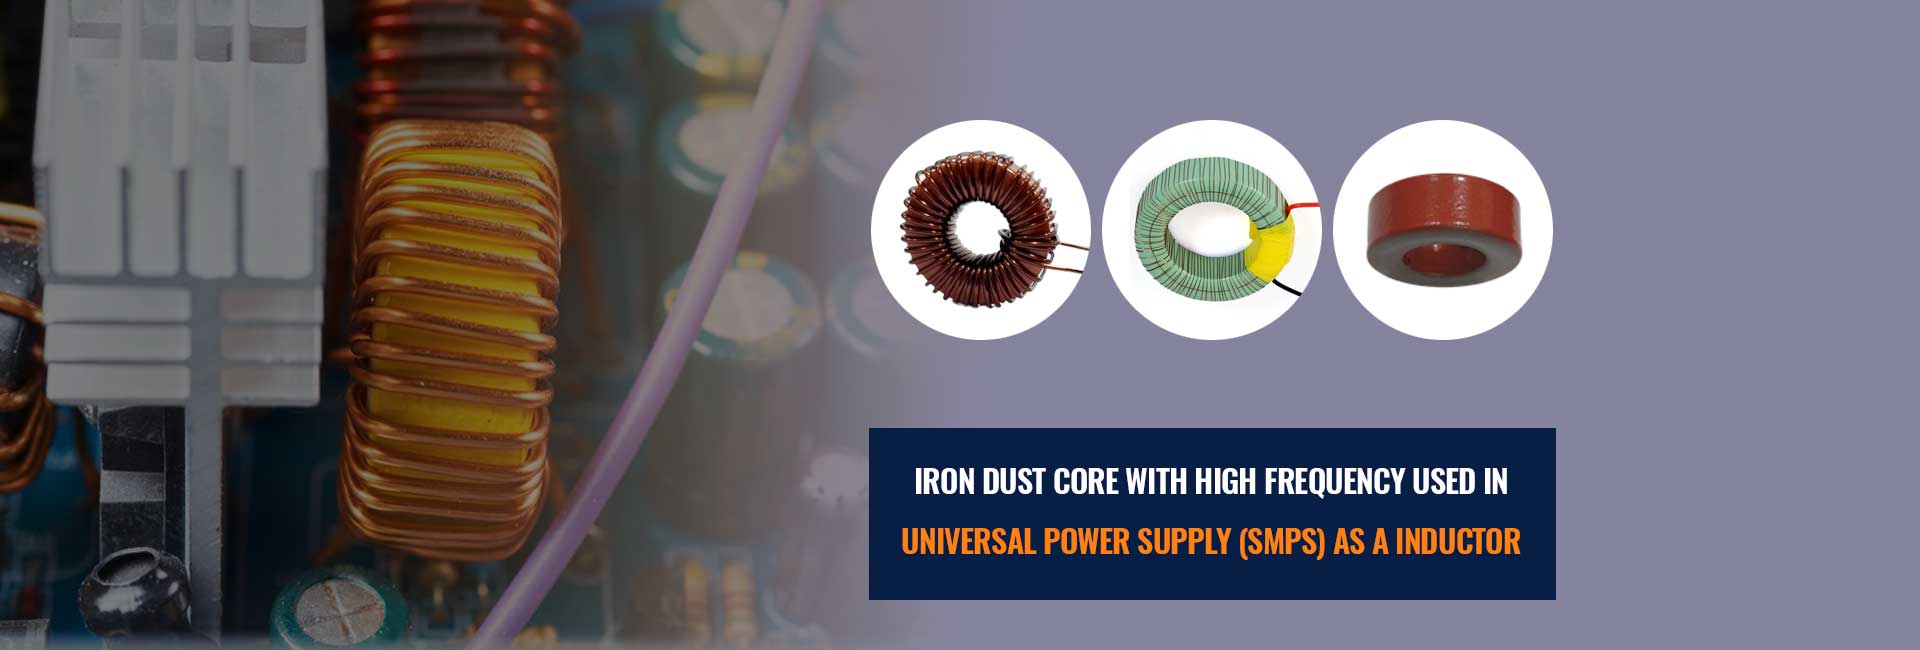 Iron Dust Core